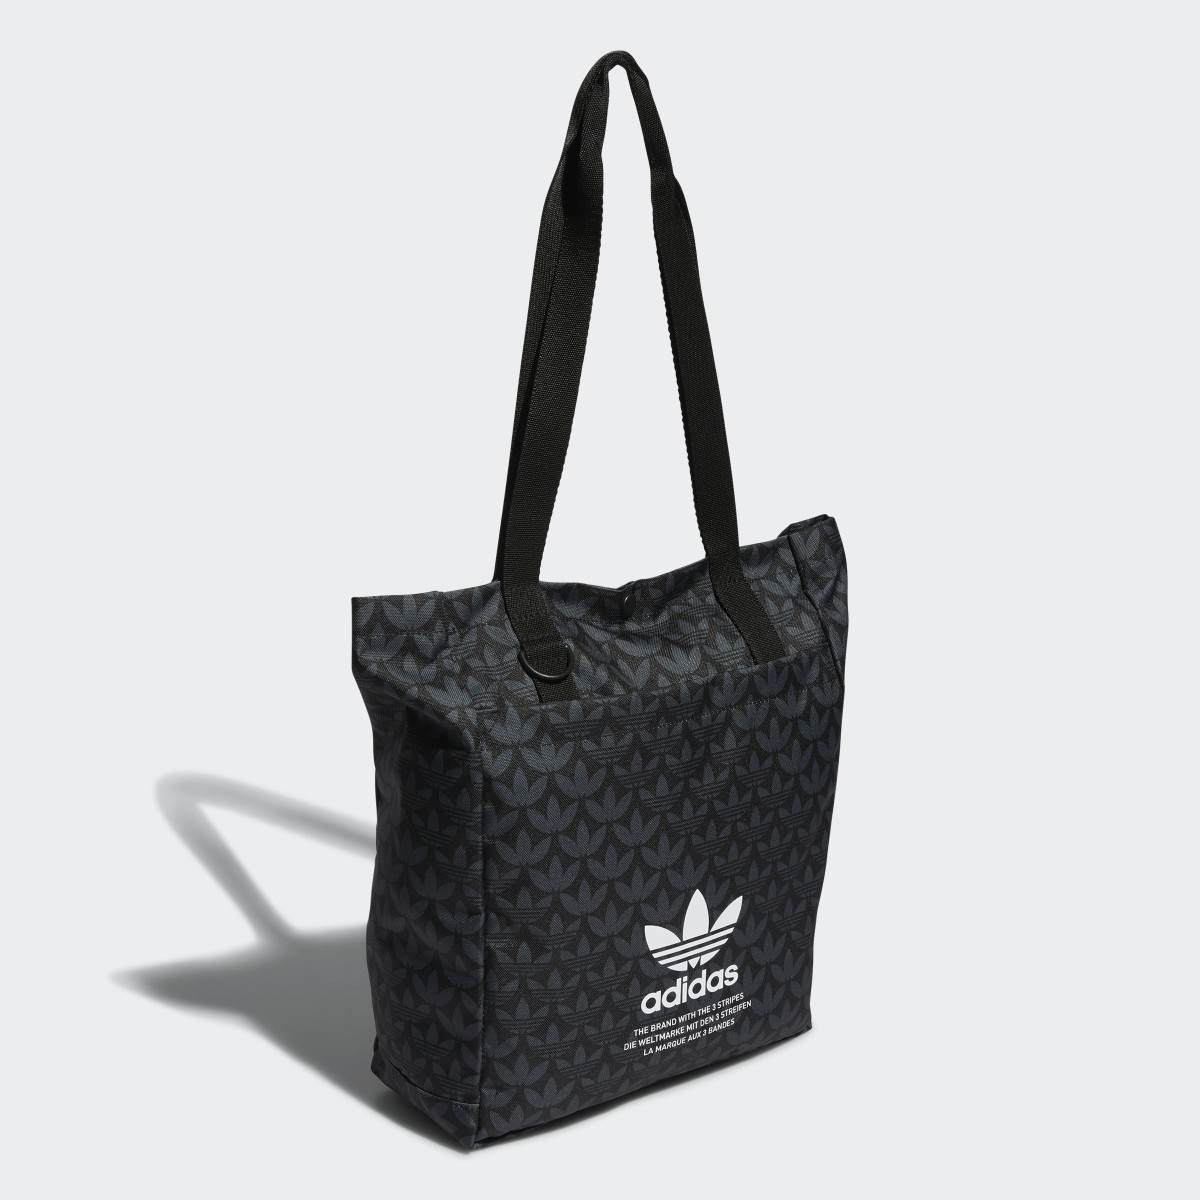 Adidas Simple Tote Bag. 4